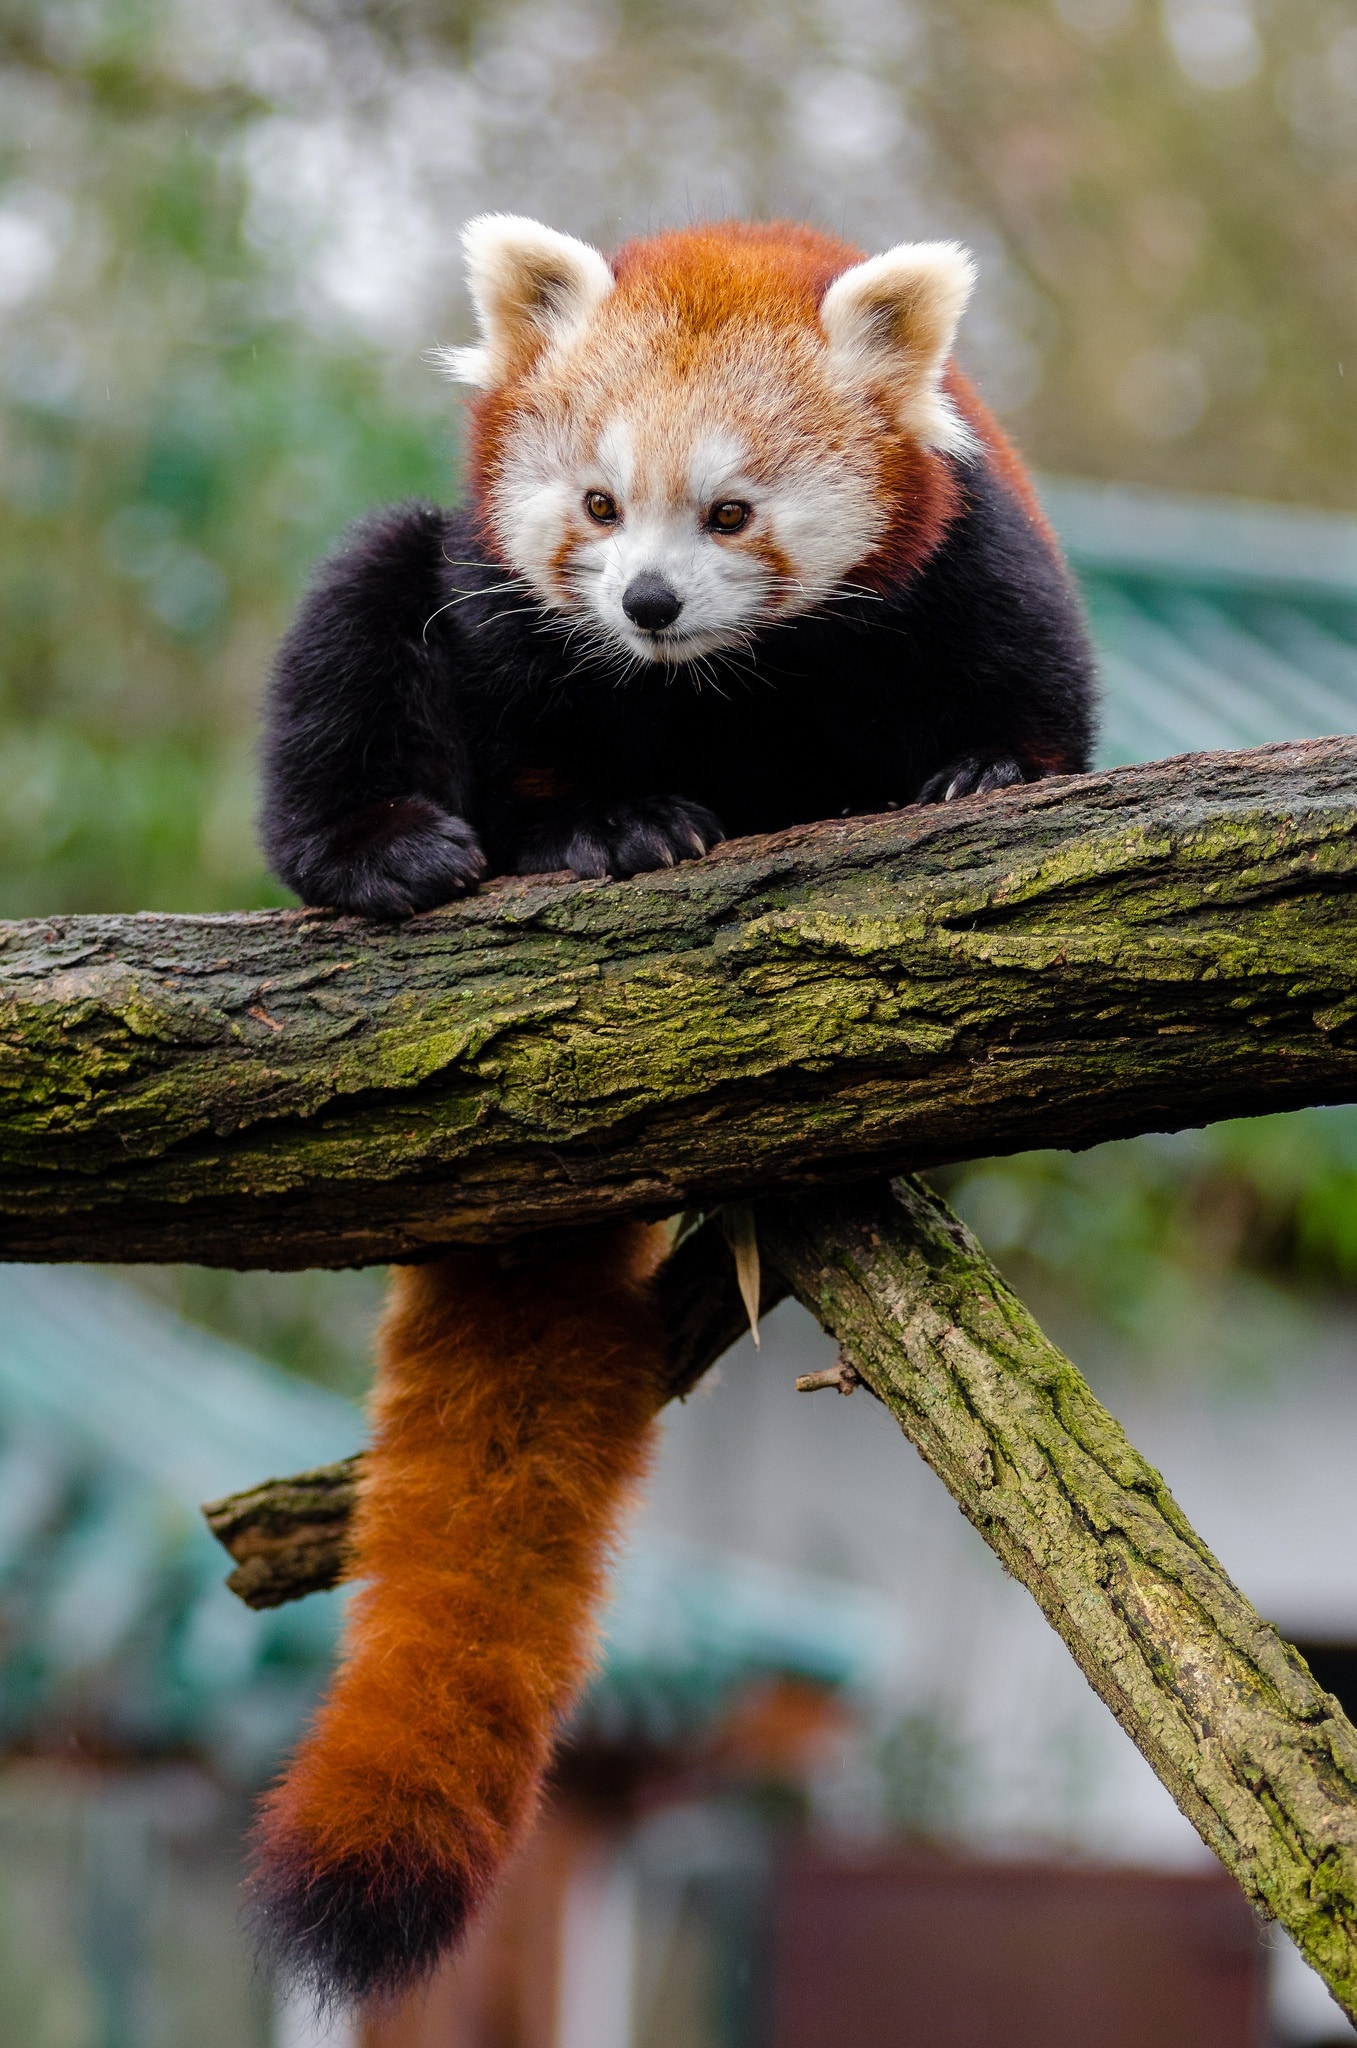 Little Panda, Cute, Red Panda, Bamboo, animal wildlife, red panda